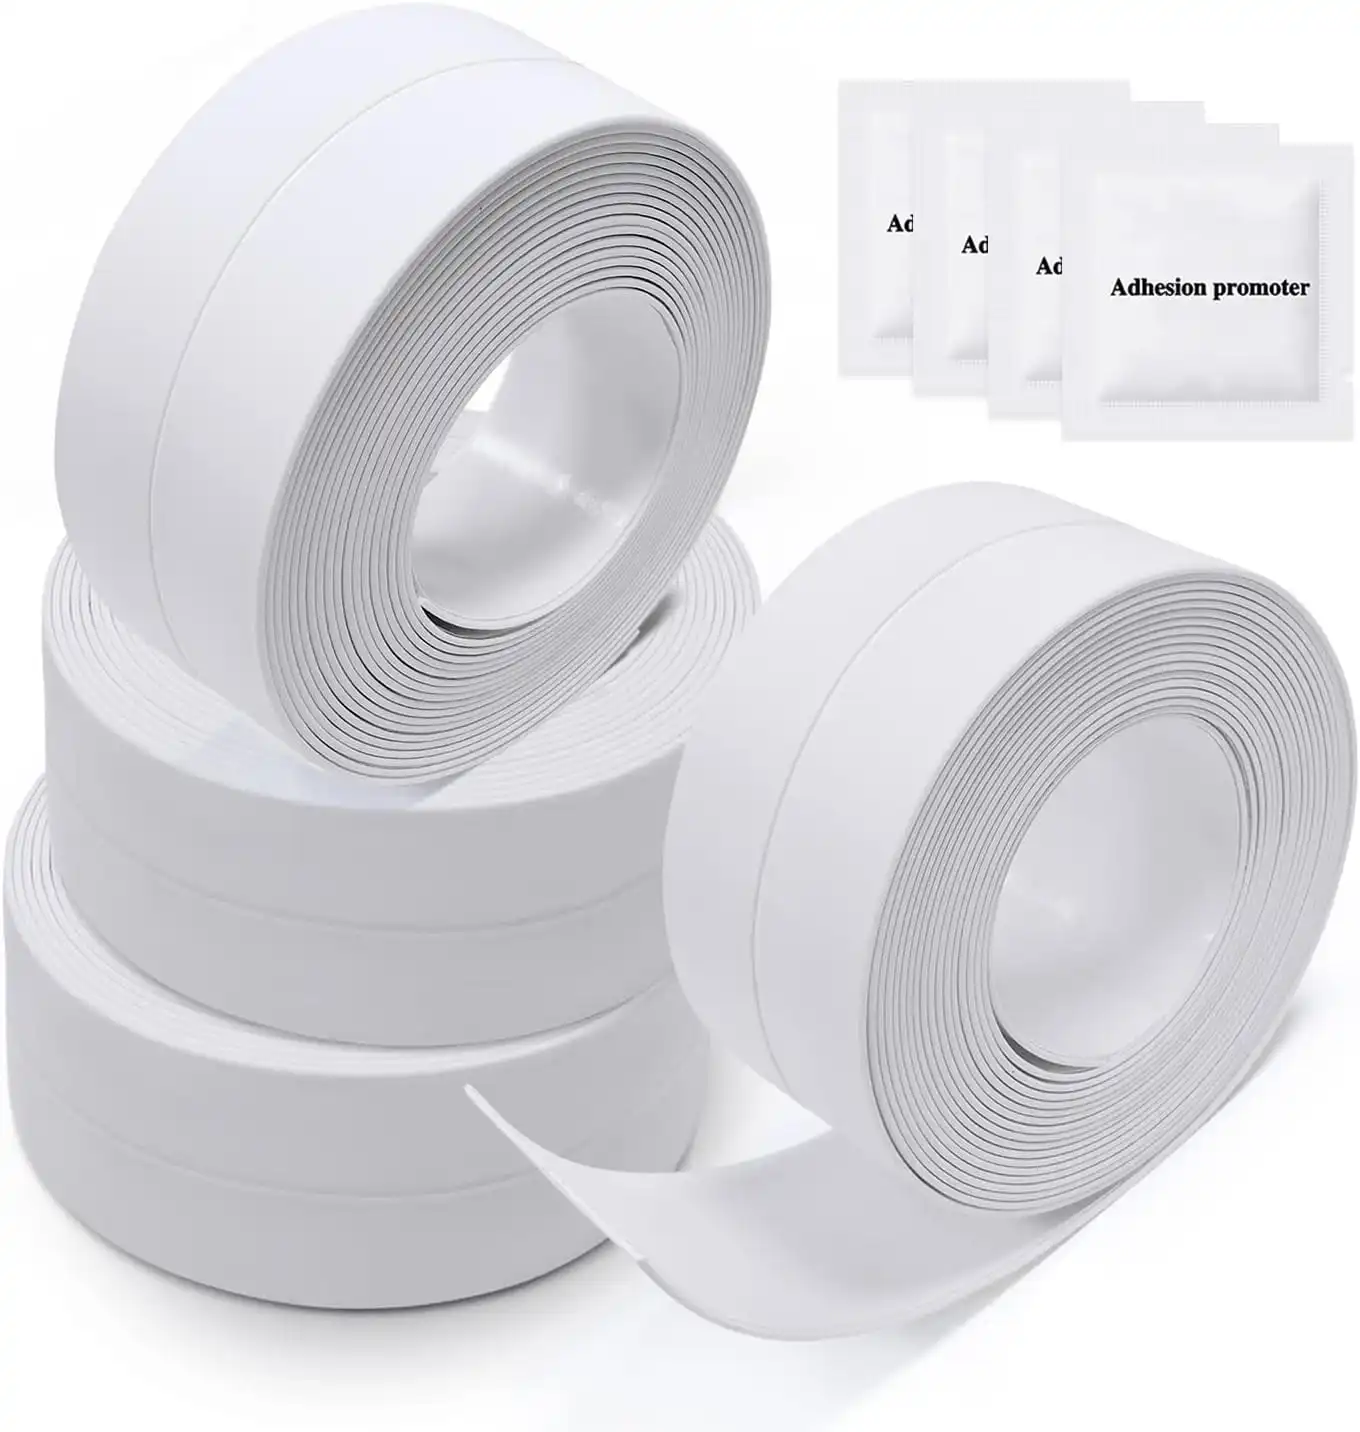 butyl adhesive tape strip self-adhesive waterproof shower floor wall white kitchen bathroom protective film